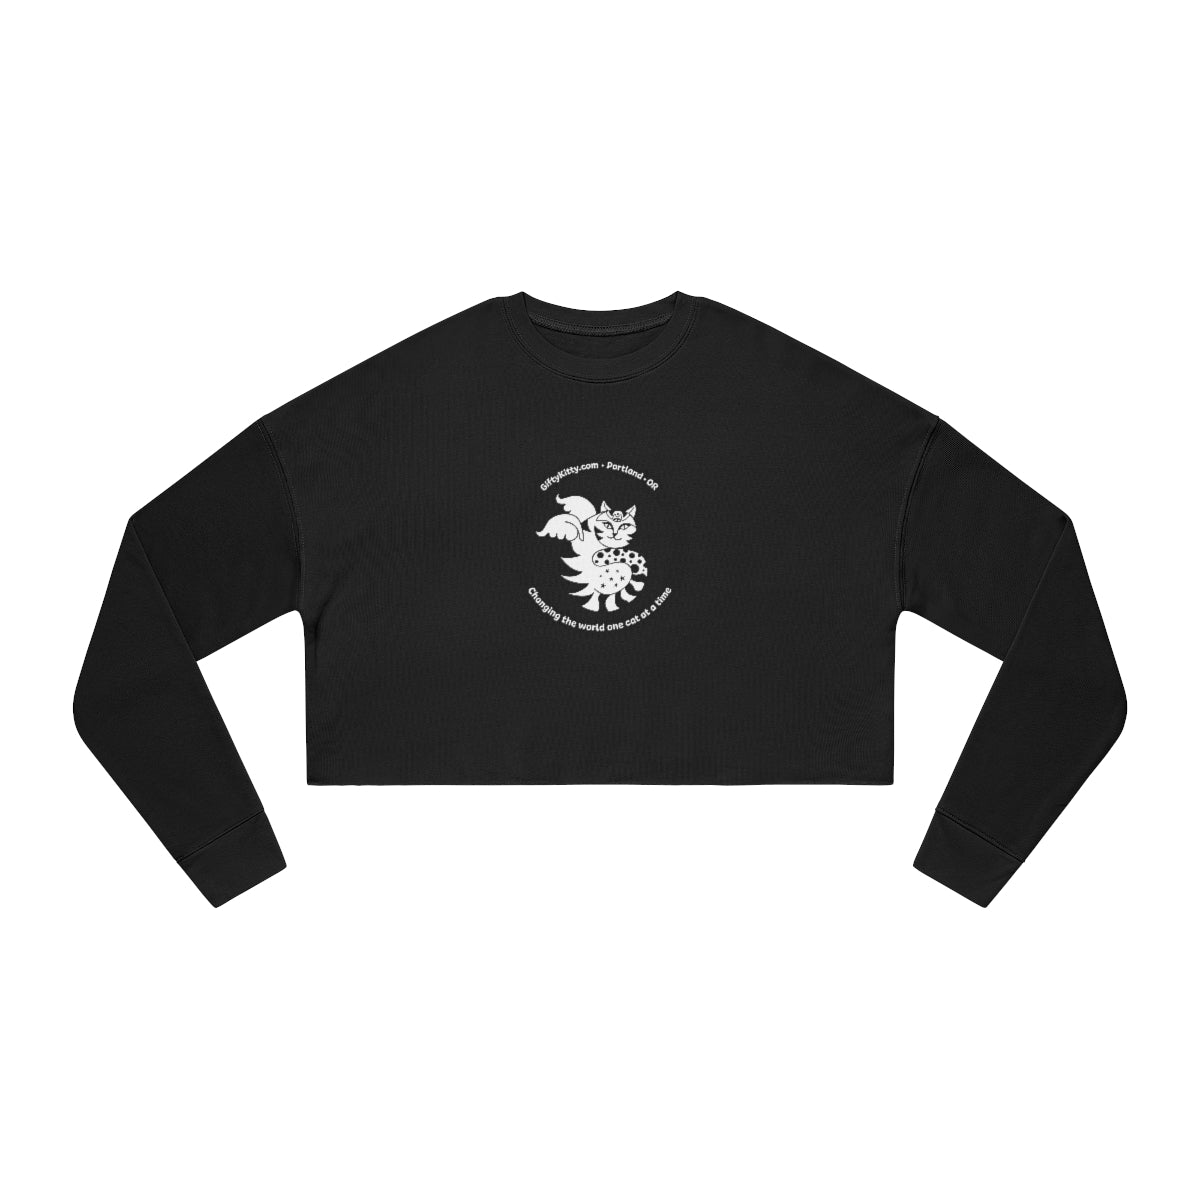  Black Crop Sweater